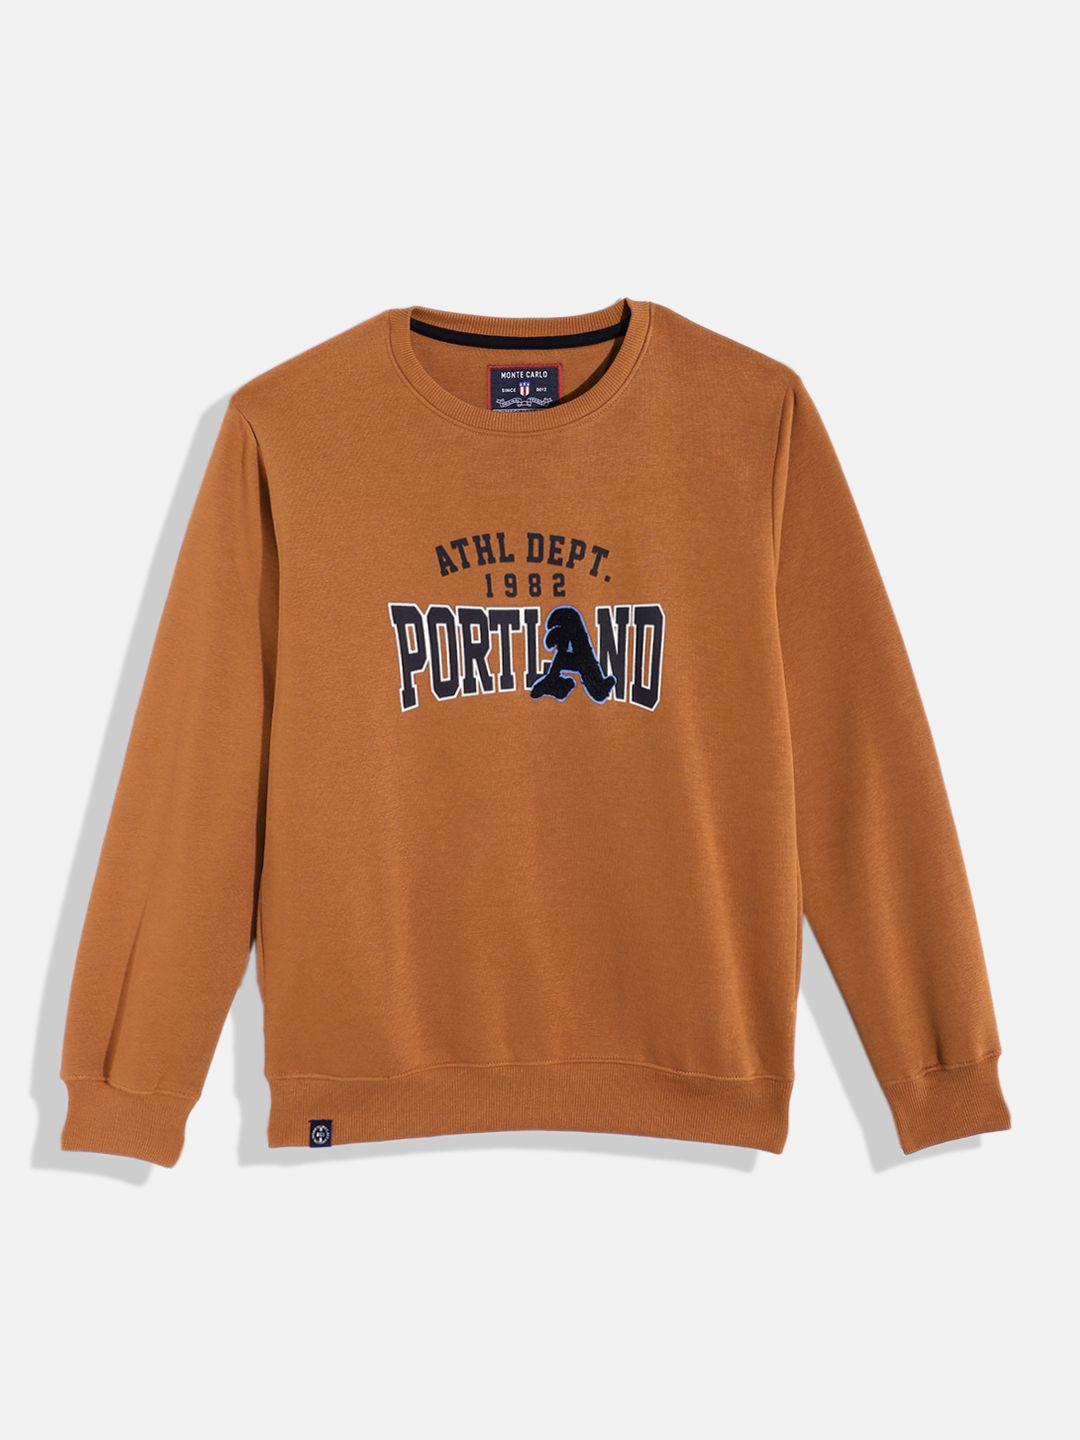 monte carlo teen boys printed sweatshirt